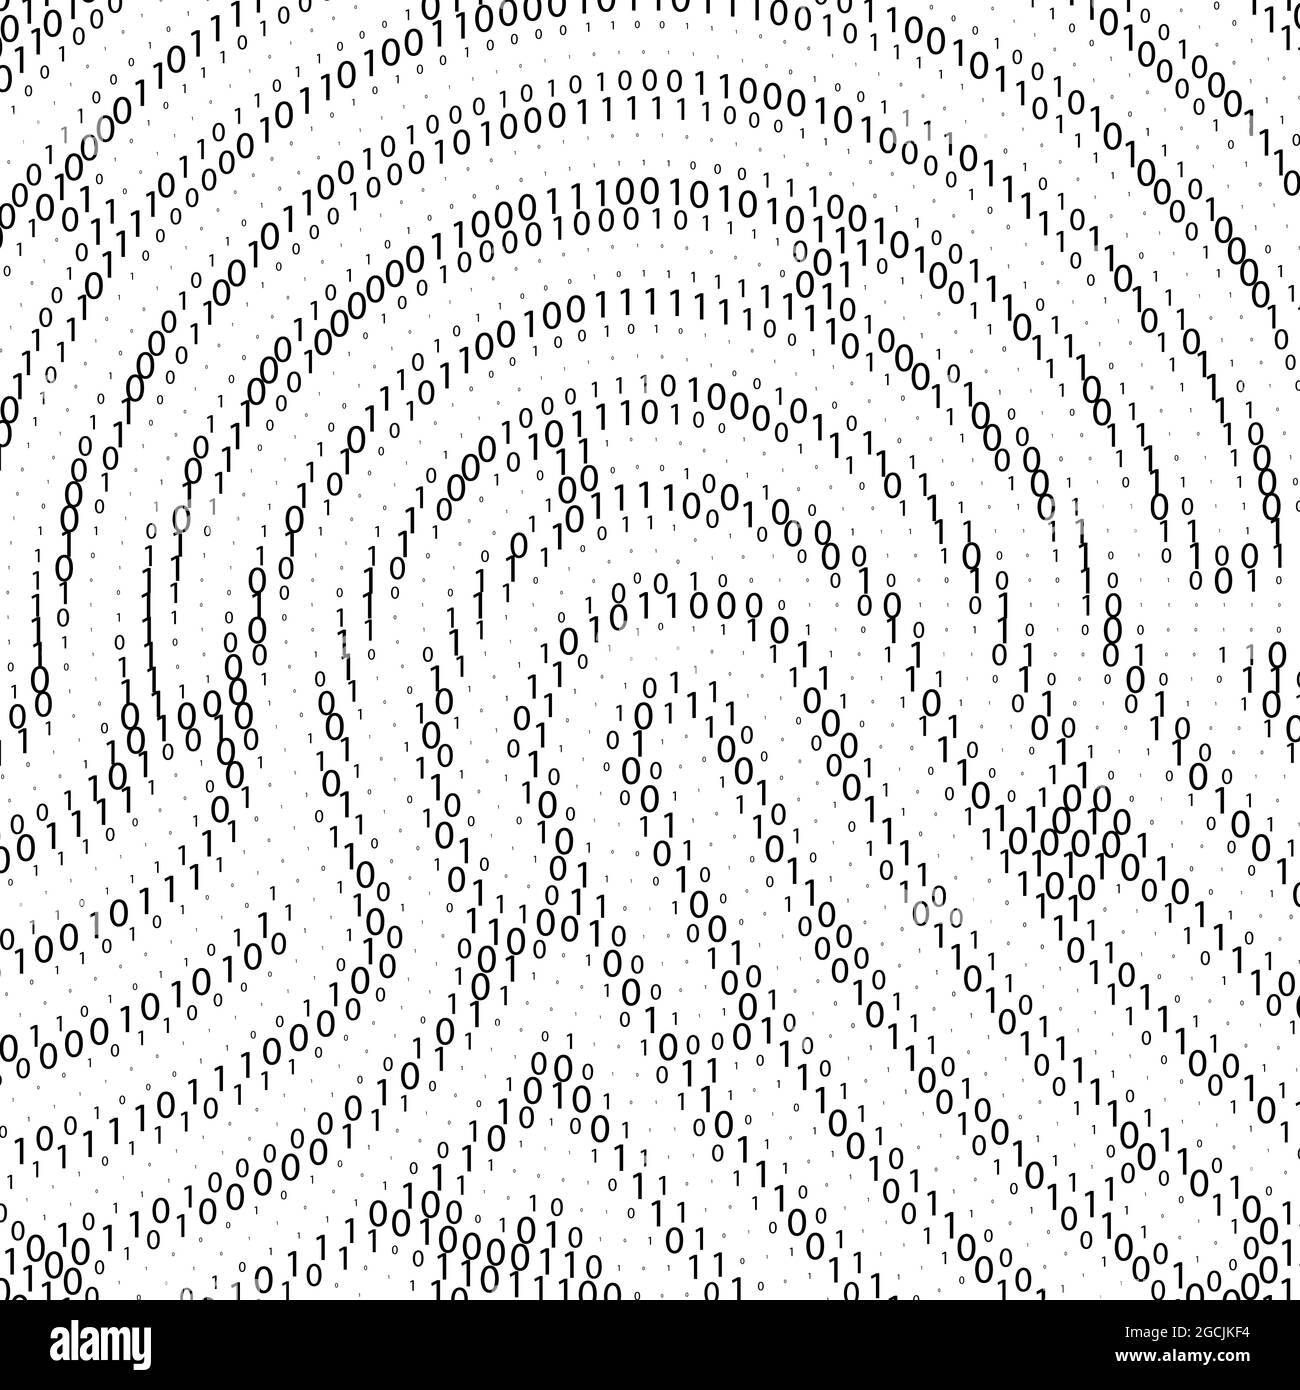 Binary code by fingerprint shape. Cyber security technology. Digital verification information. Black digits on white background. Vector illustration Stock Vector